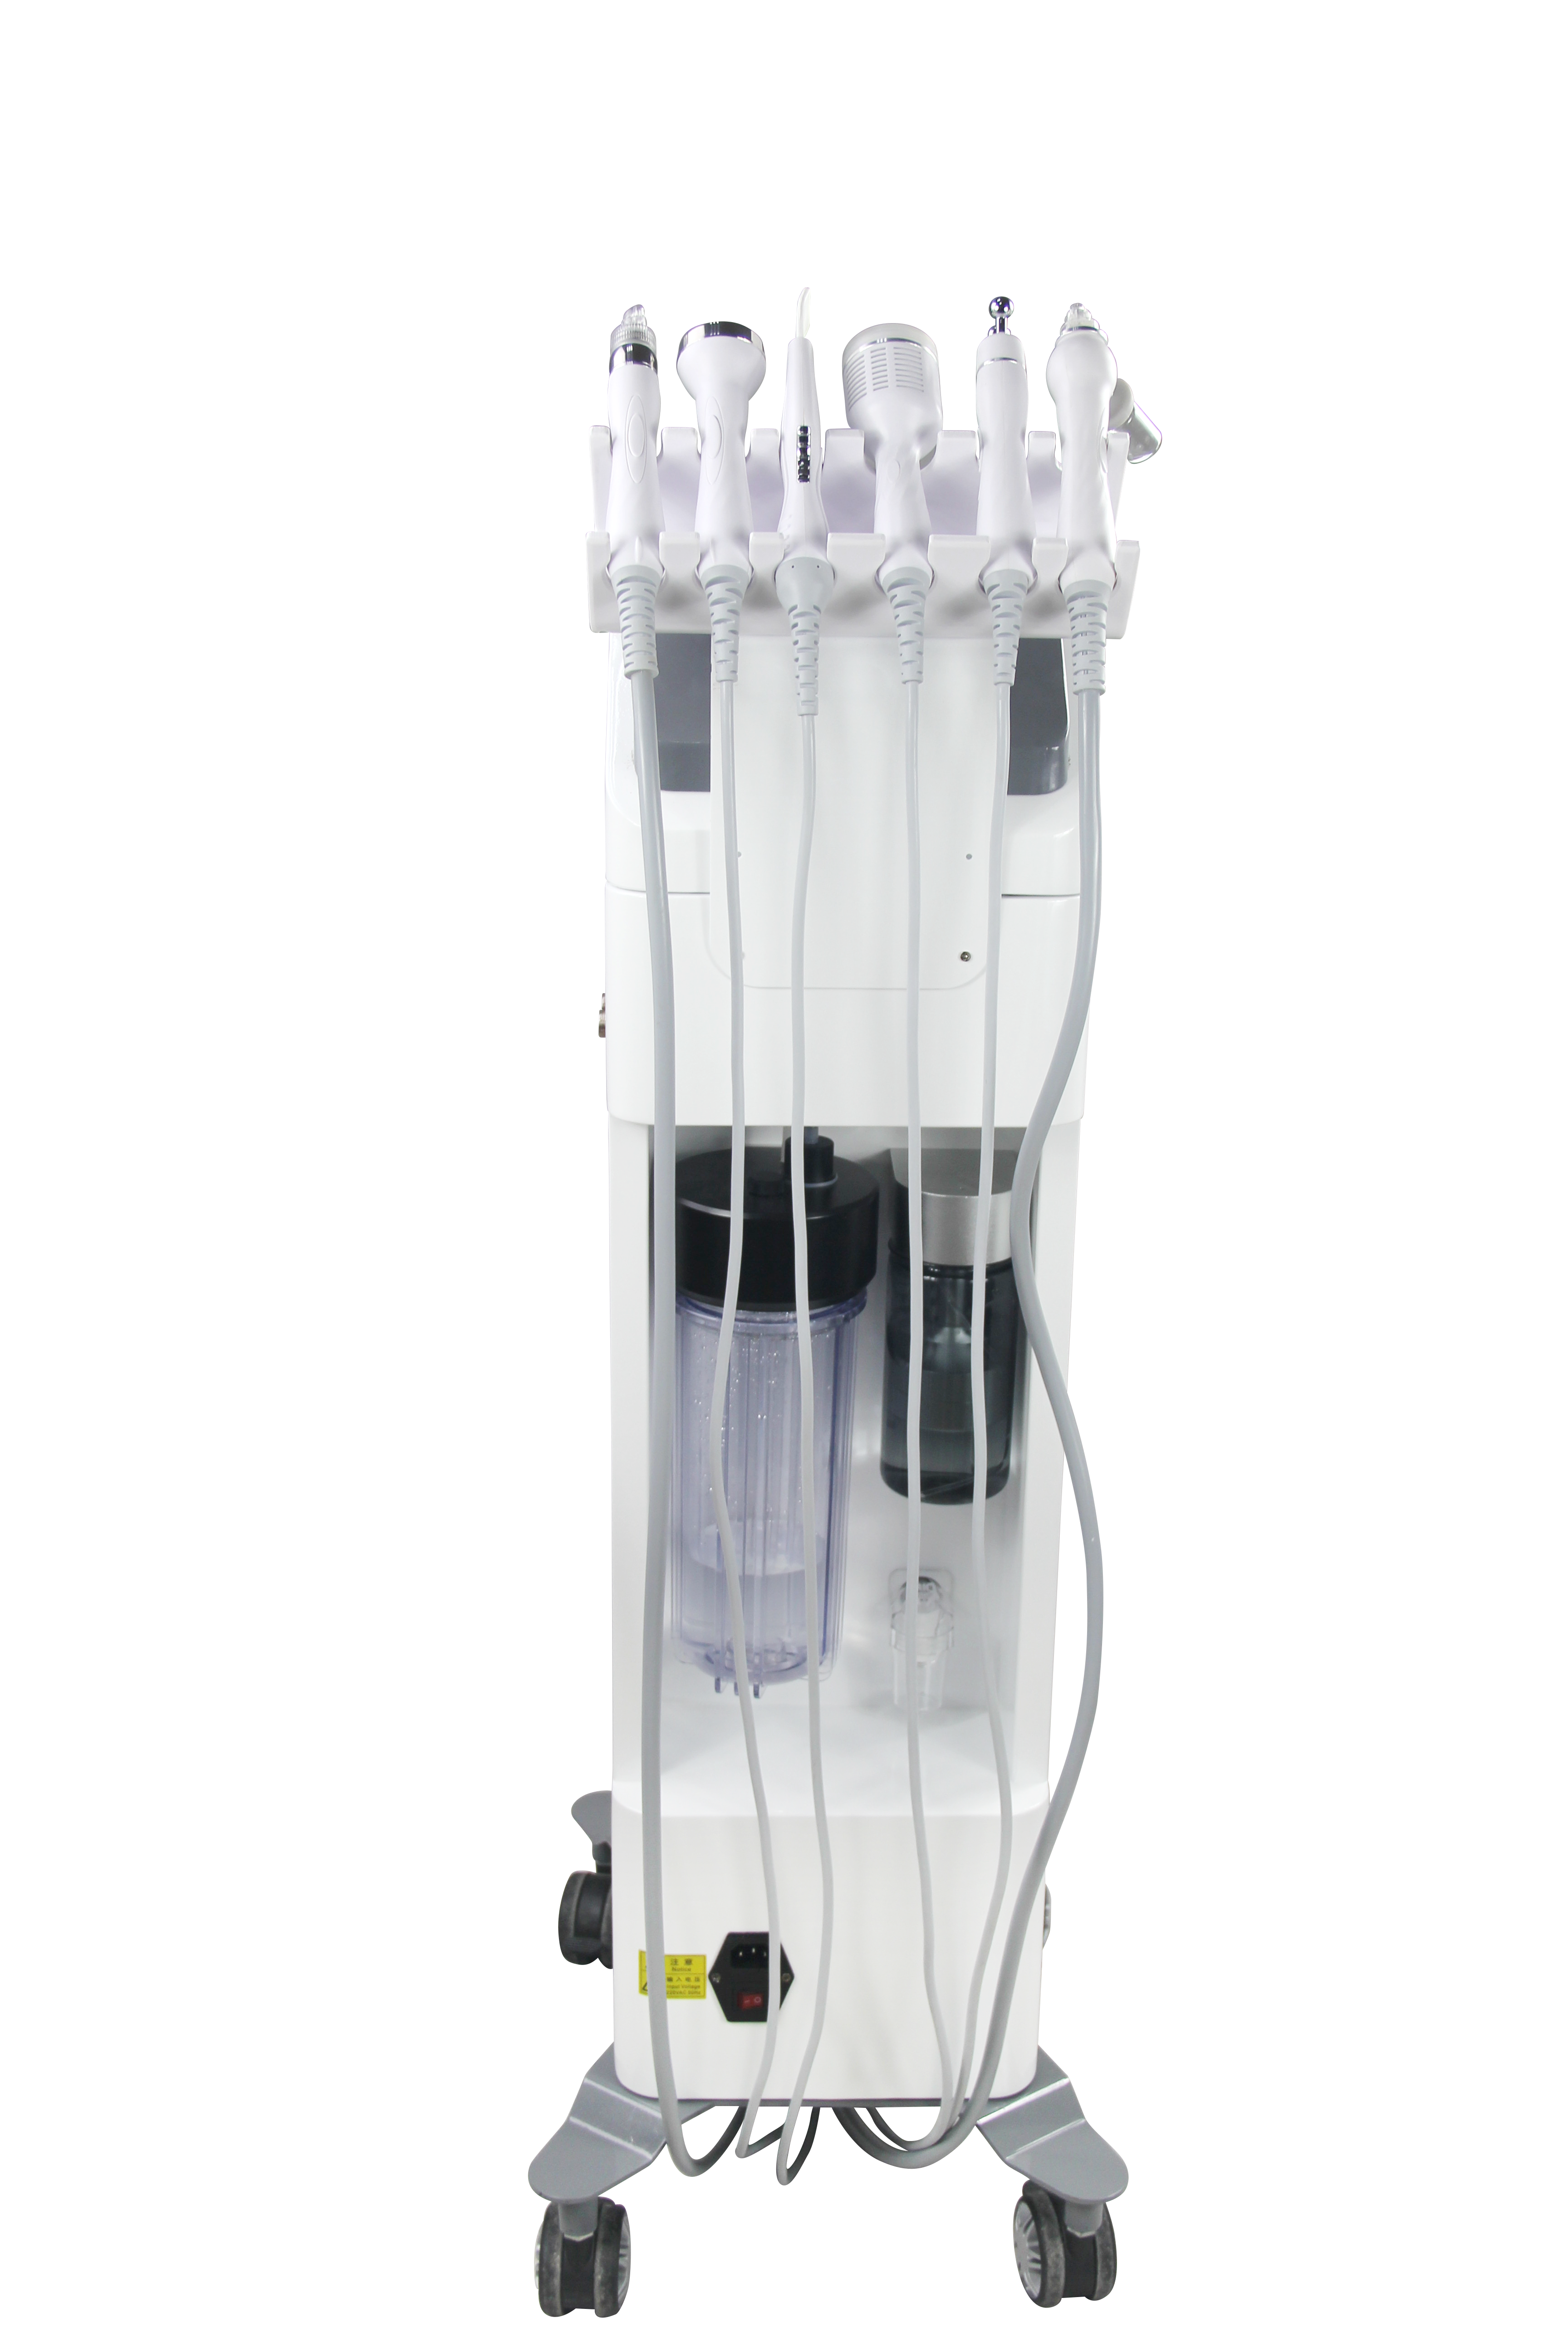 H2 O2 Hydro Microdermebrasion Skin Clean Machine Anti-Aging Oxygen Jet SPA Beauty Equipment Hydrafacial